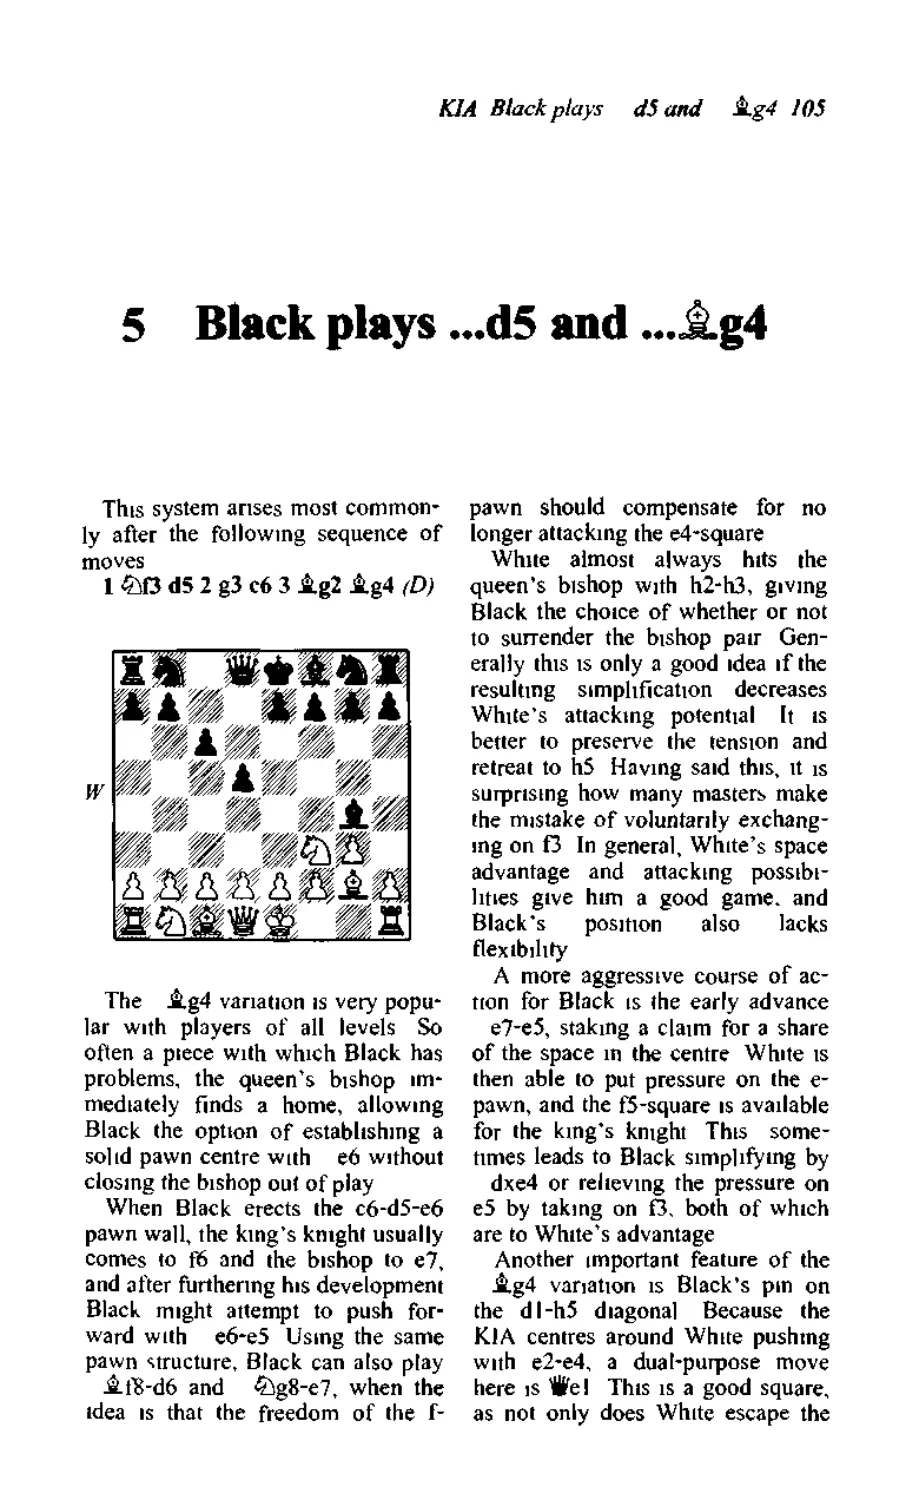 5. Black plays ...d5 and ...Bg4